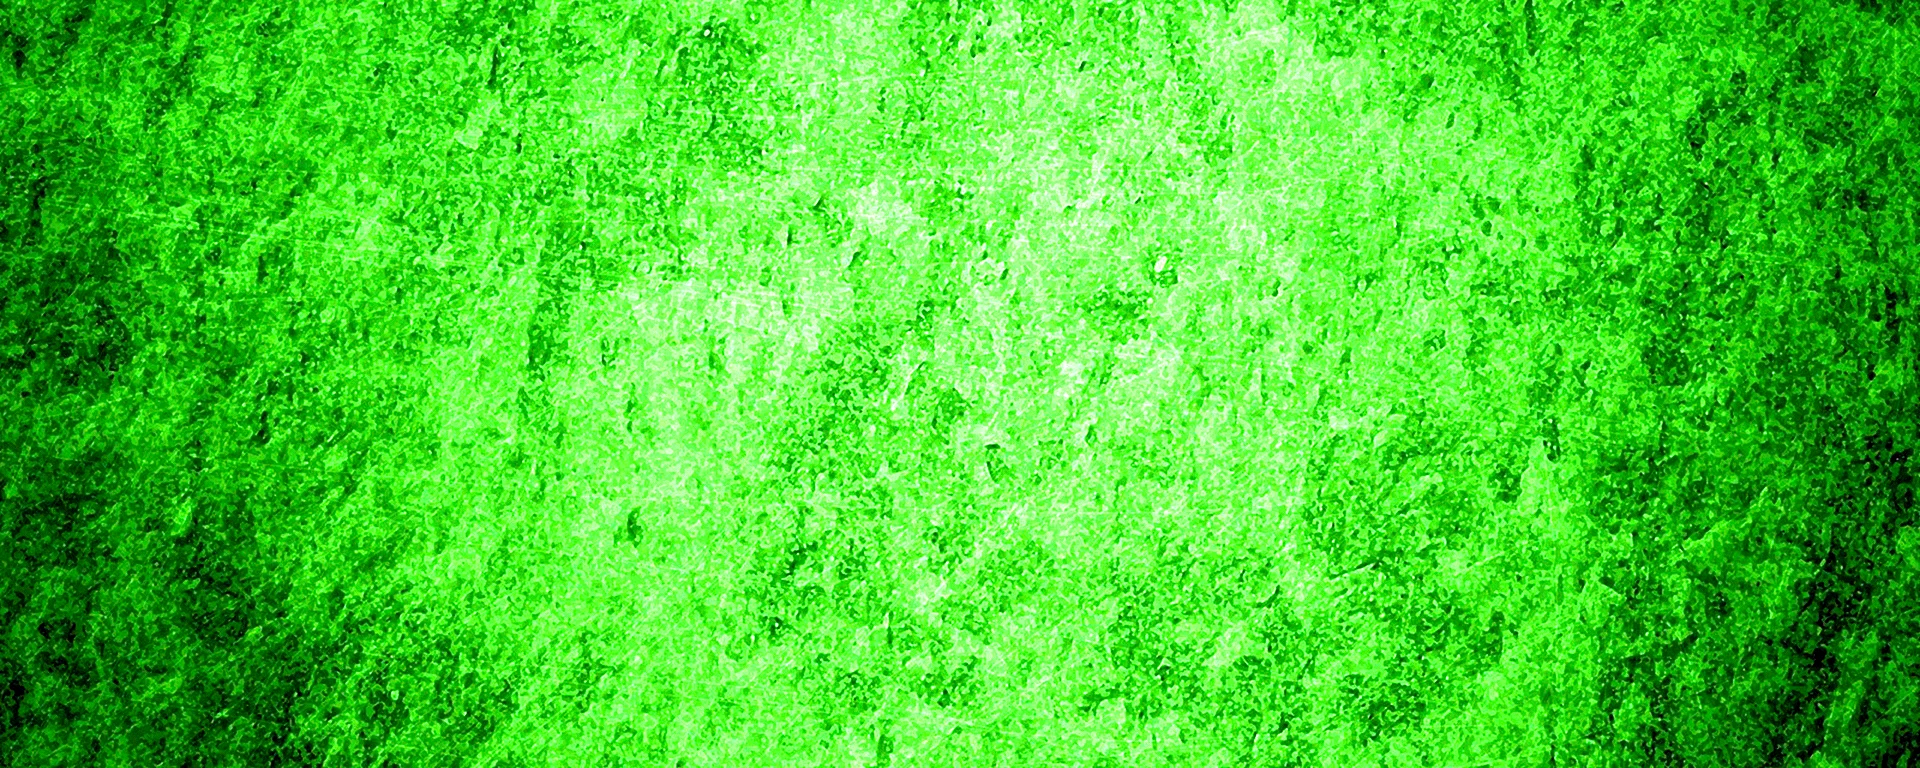 Green Leather Texture Seamless Wallpaper